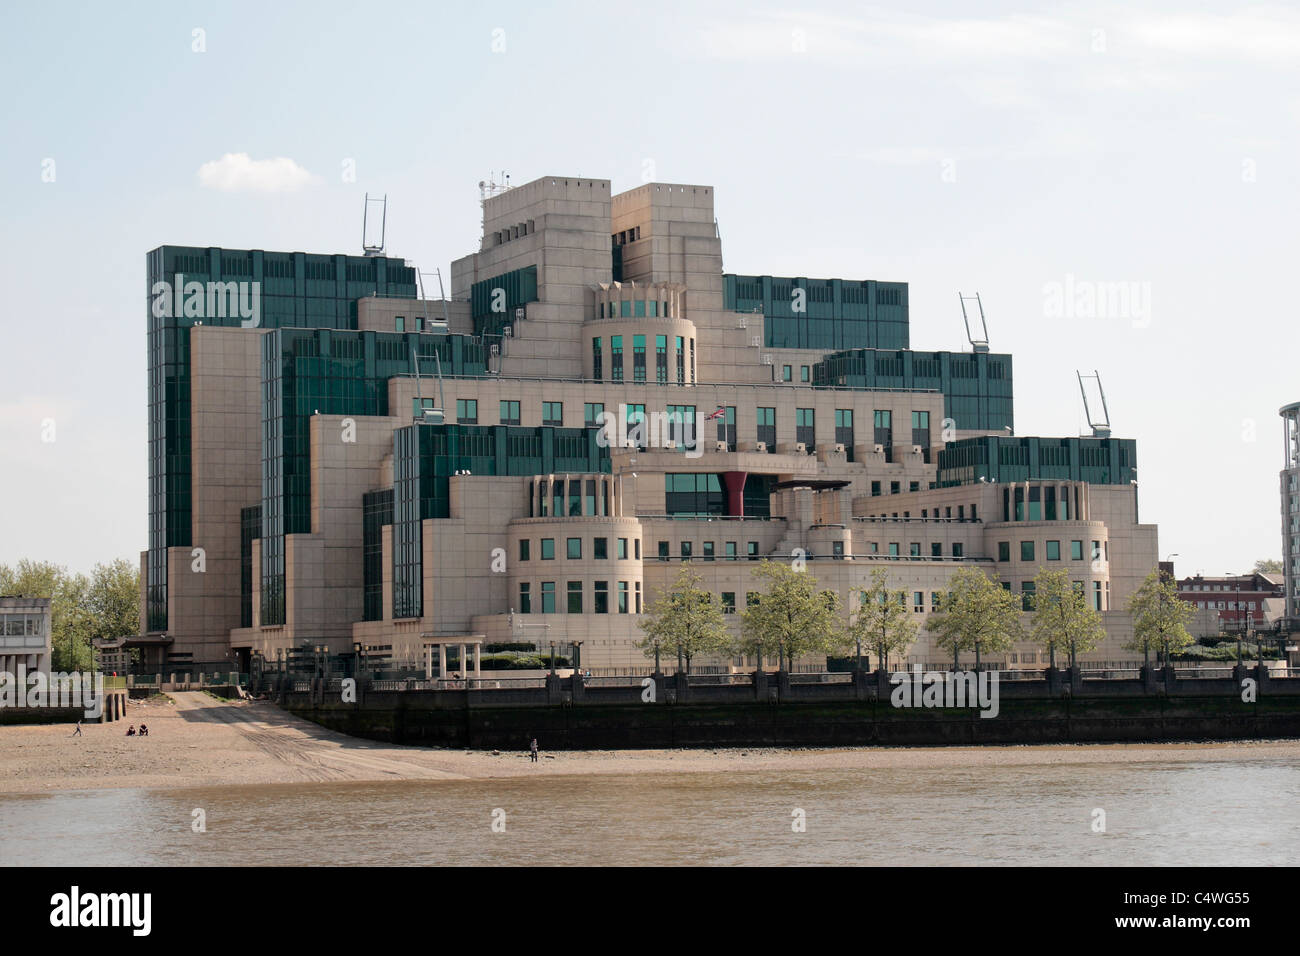 The headquarters of MI6, the British Secret Intelligence Service, Vauxhall, London, UK. Stock Photo